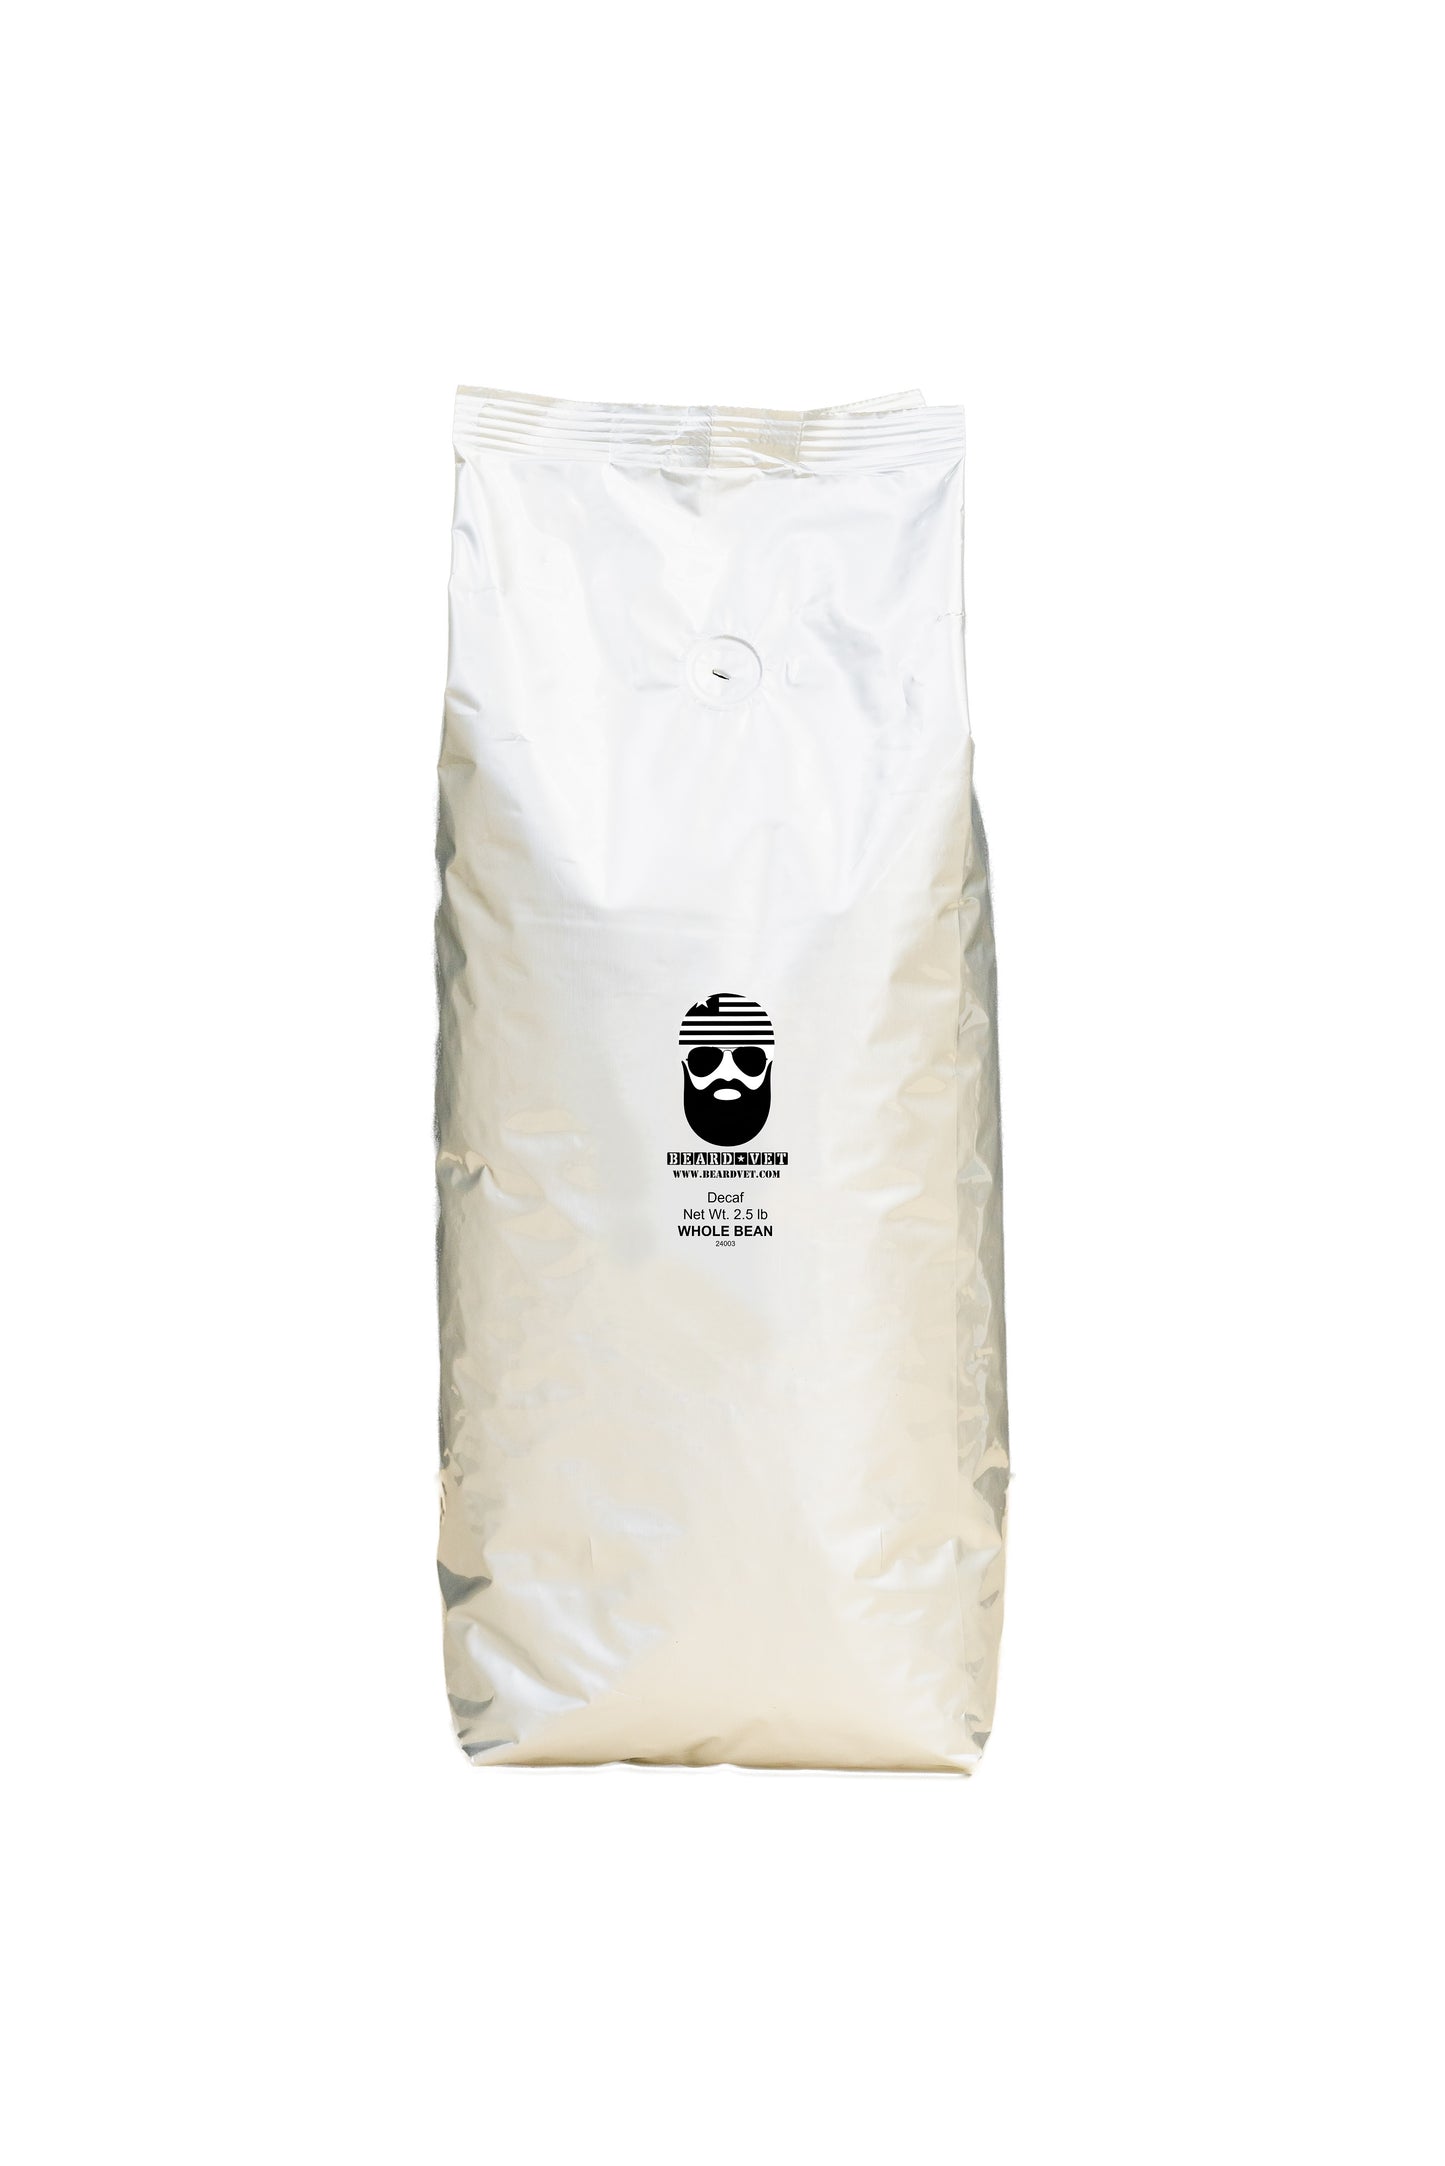 2.5 lb bag - House Blend Decaf - WHOLE BEAN